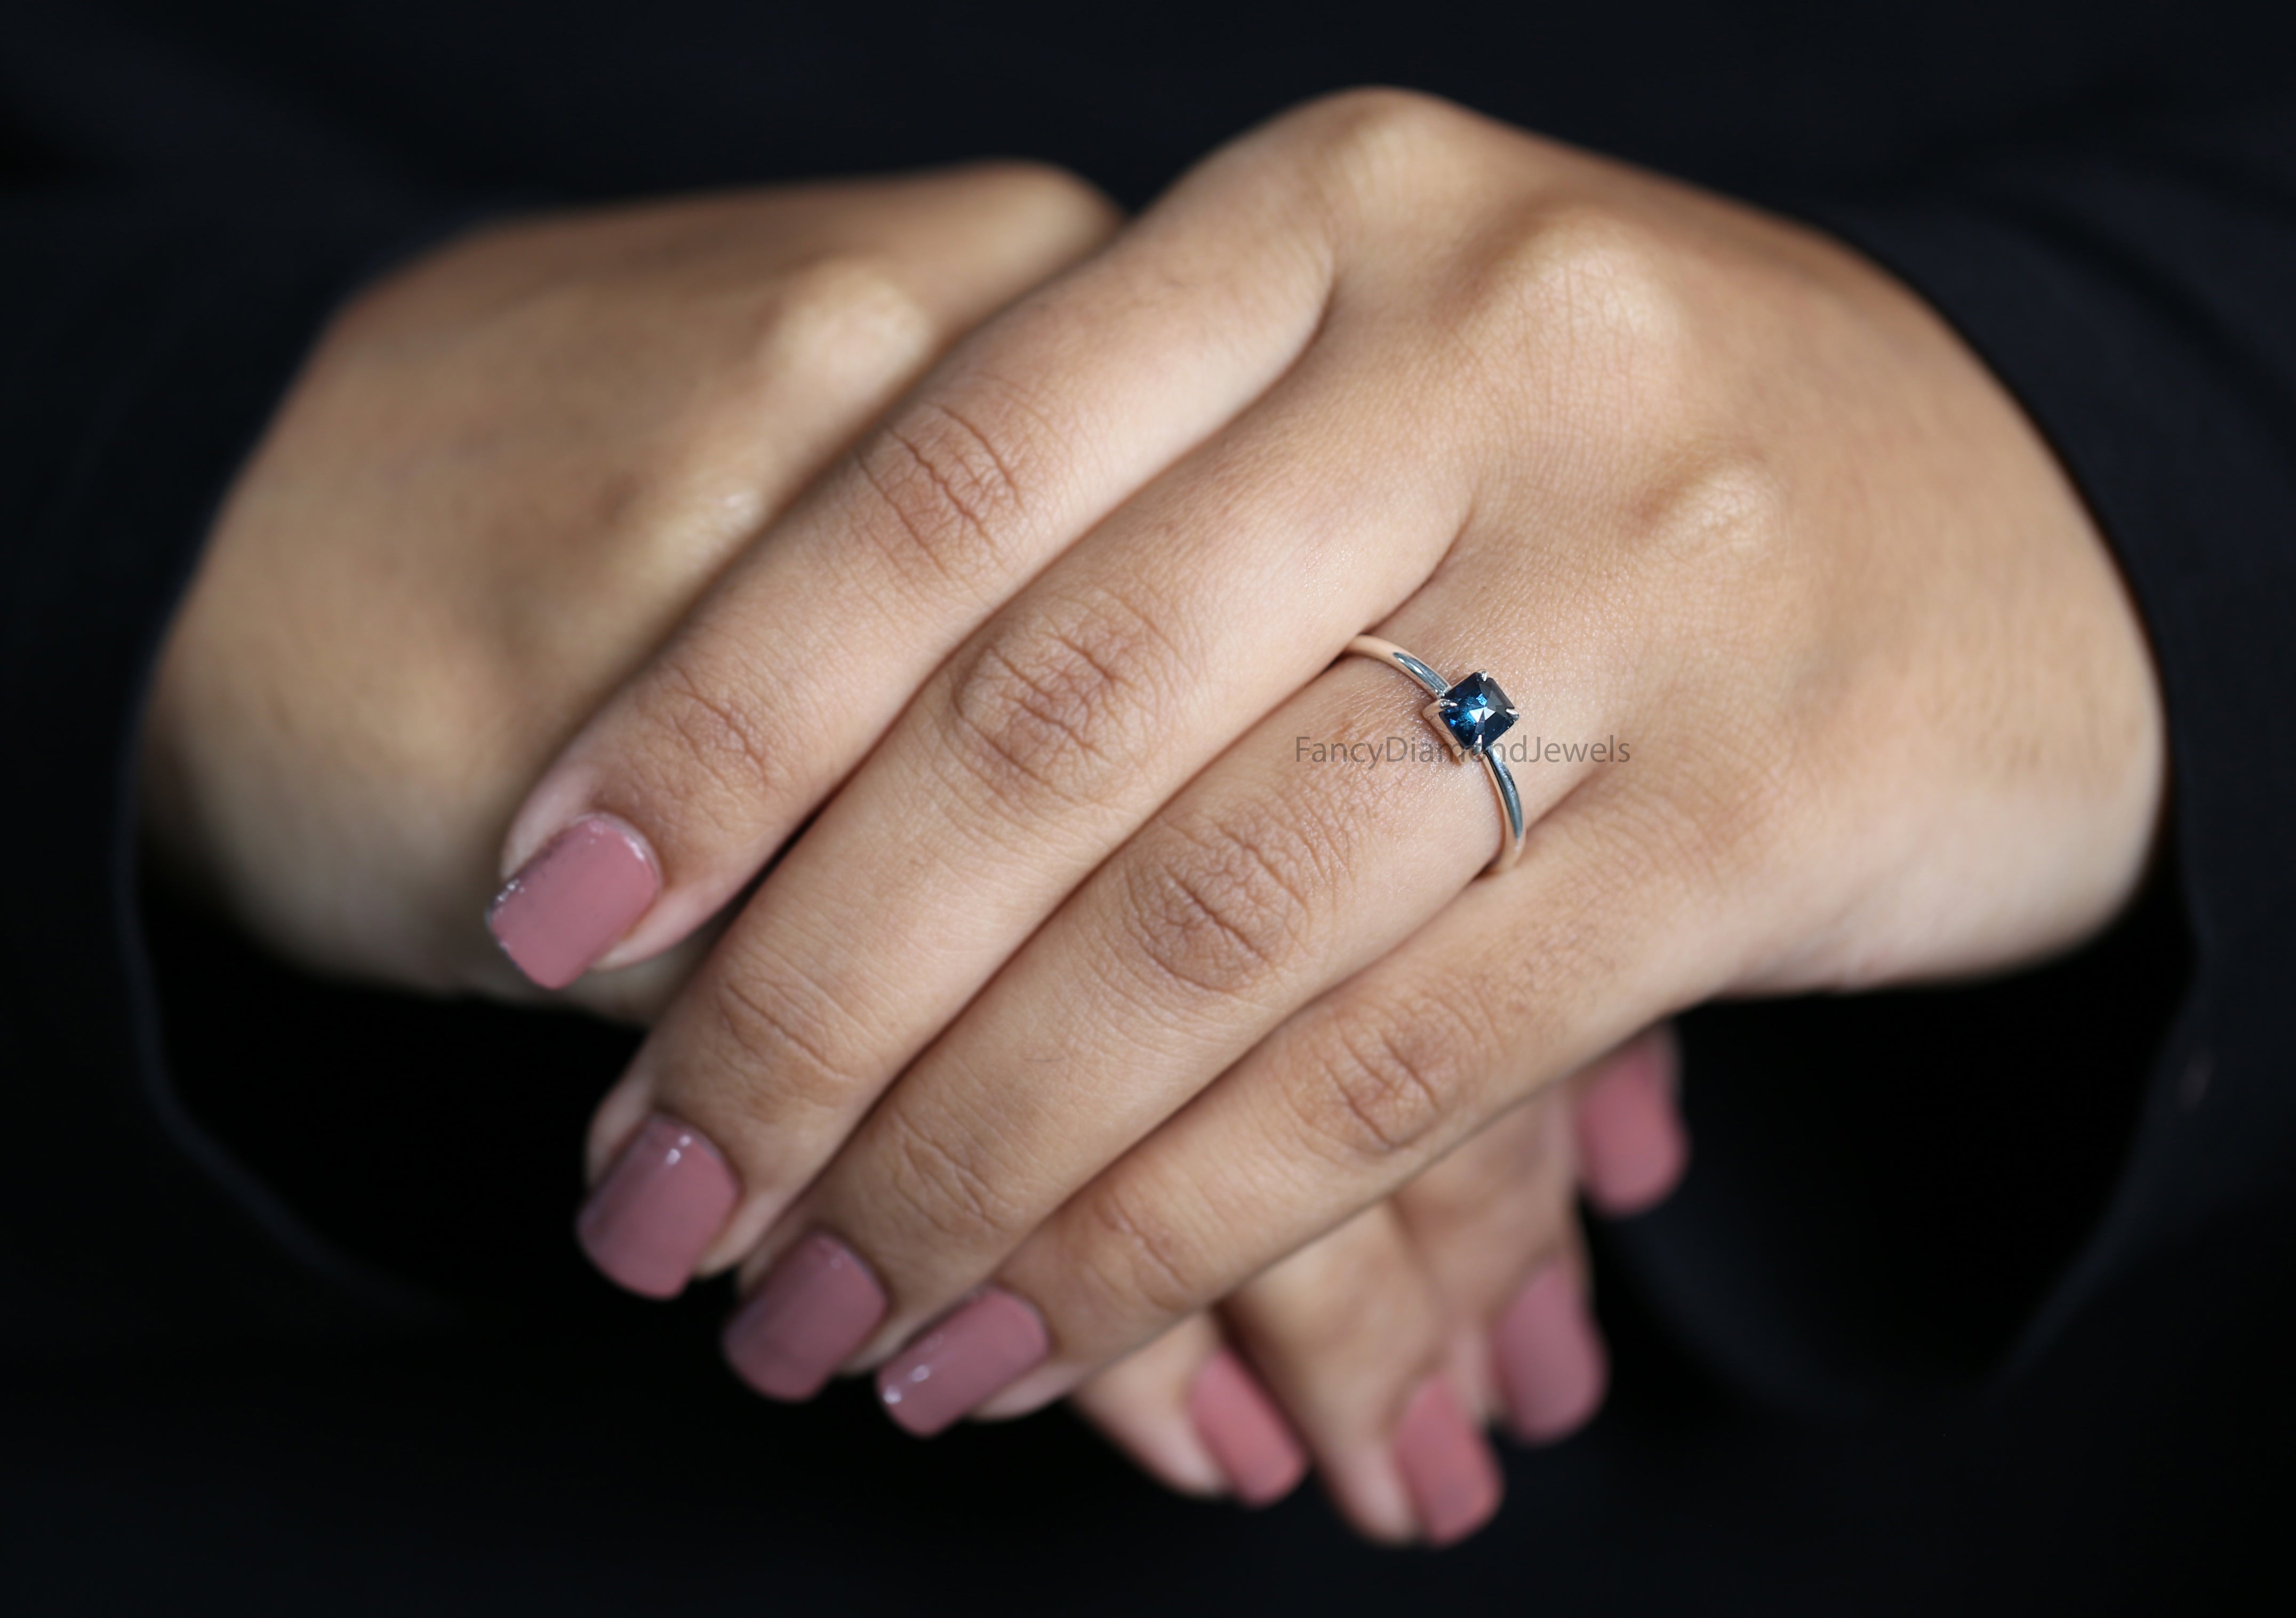 Emerald Diamond Ring, Emerald Engagement Ring, Blue Color Emerald Diamond Ring, Emerald Cut Diamond Ring, Emerald Blue Diamond Ring, KD1156